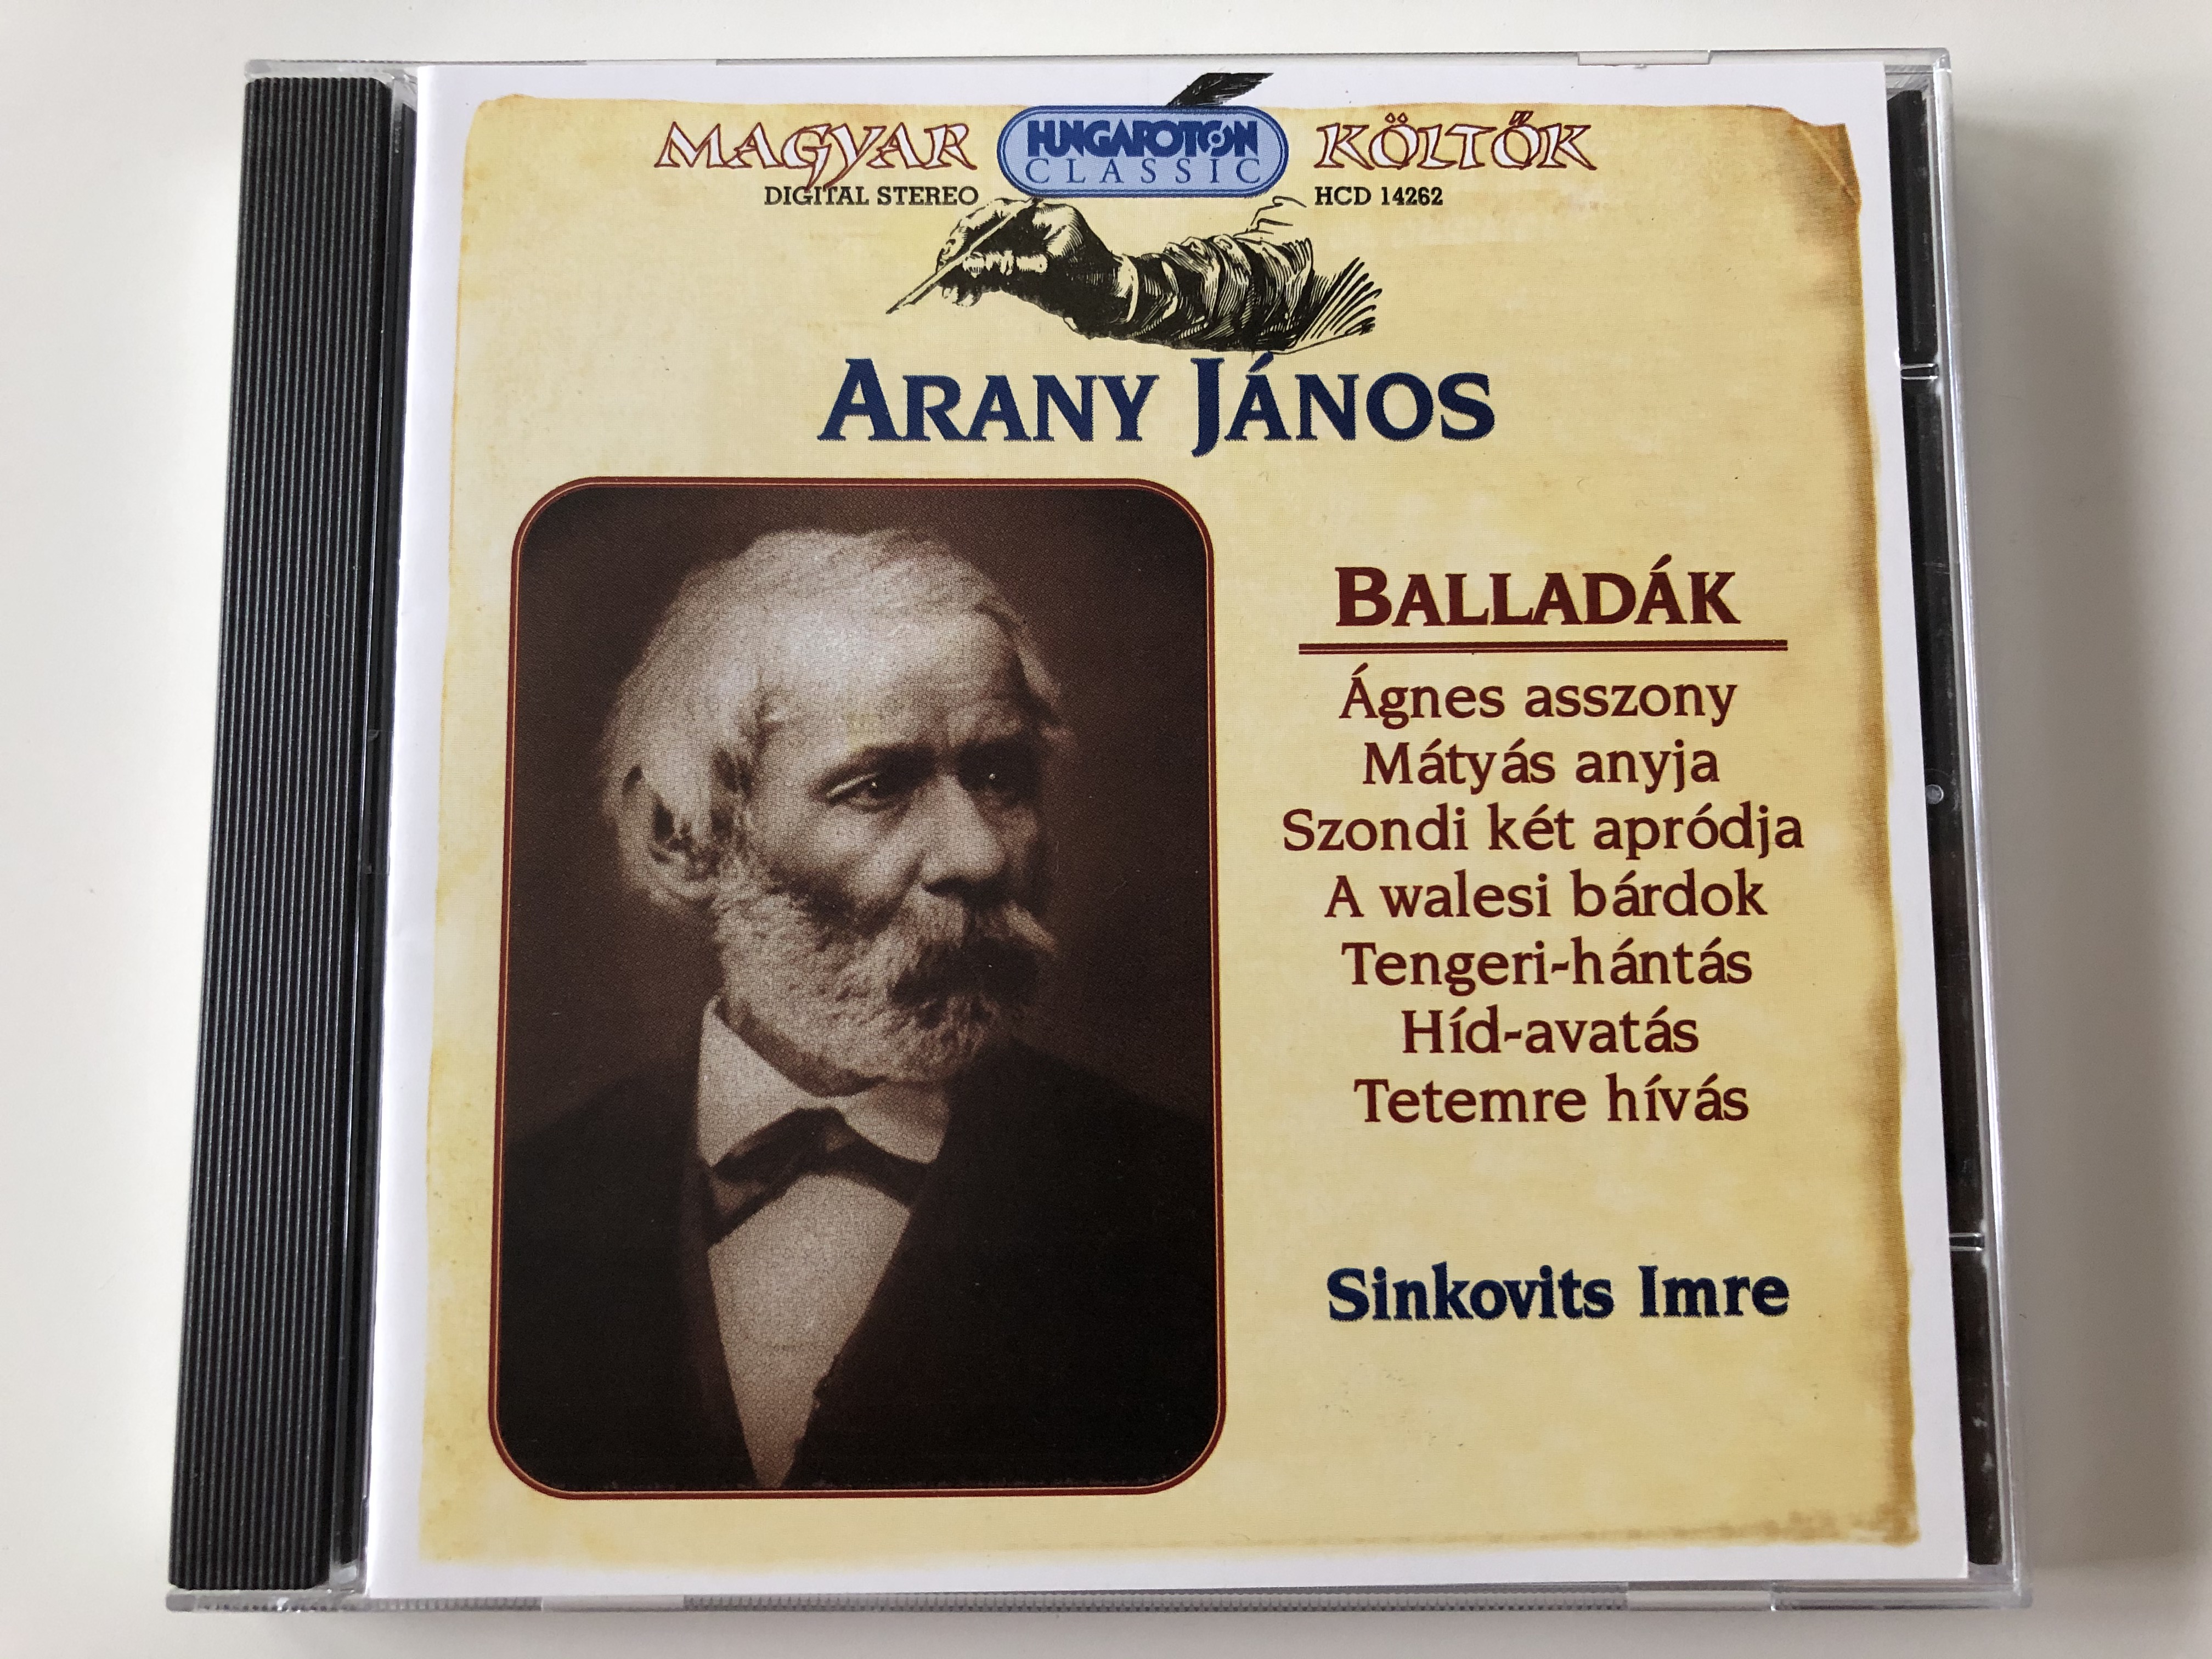 arany-janos-balladak-agnes-asszony-matyas-anyja-szondi-ket-aprodja-a-walesi-bardok-tengeri-hantas-hid-avatas-tetemre-hivas-sinkovits-imre-hungaroton-classic-audio-cd-1998-stereo-hcd-14-1-.jpg